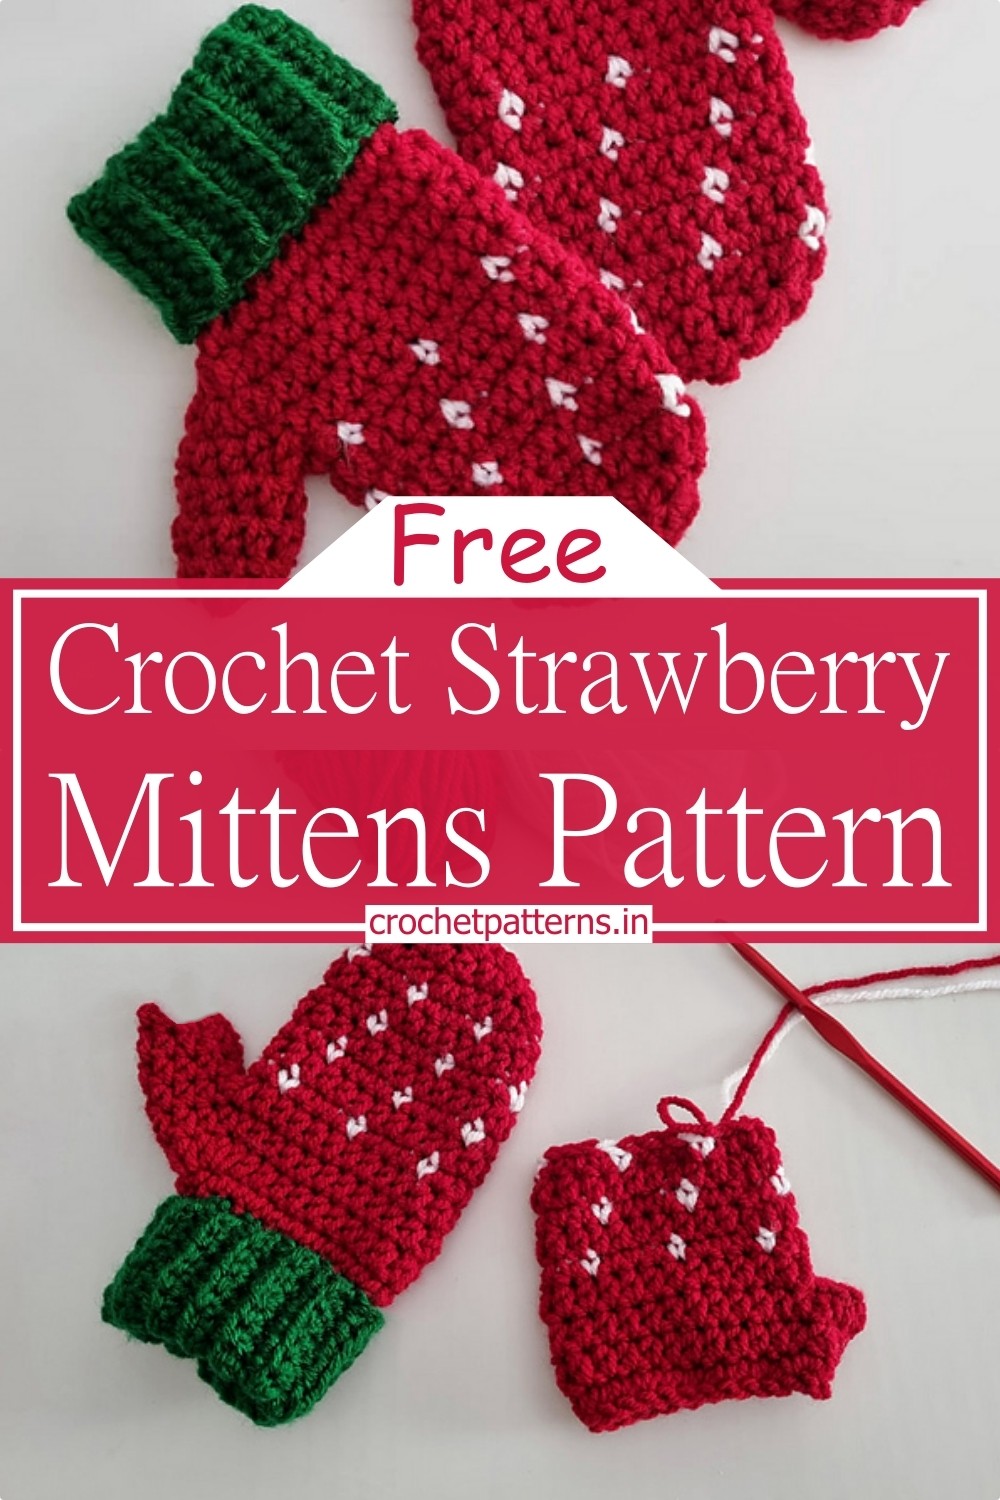 Crochet Strawberry Mittens Pattern